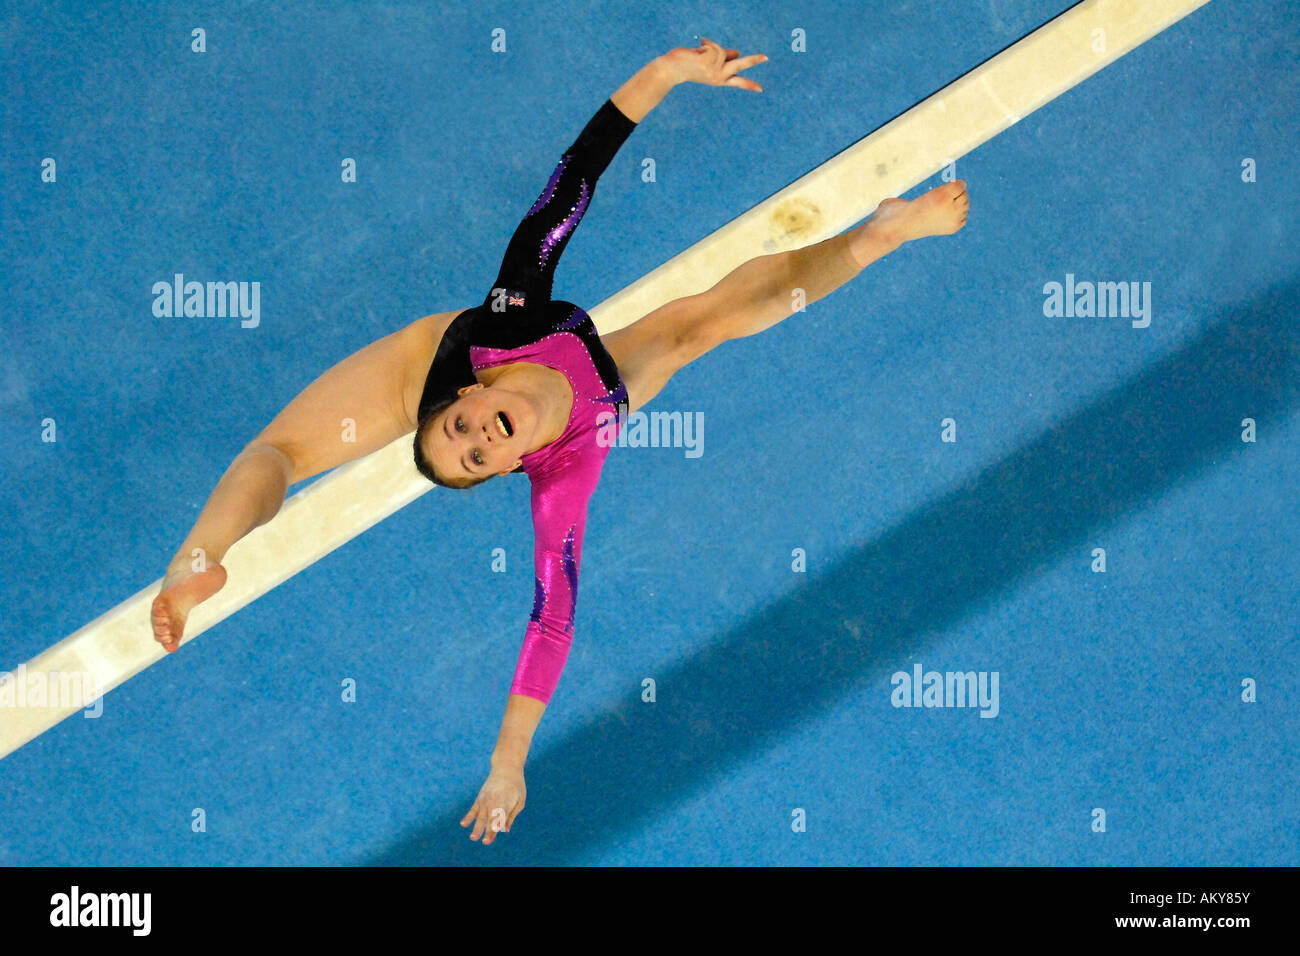 Artistic Gymnastics balance beam bird's view Stock Photo